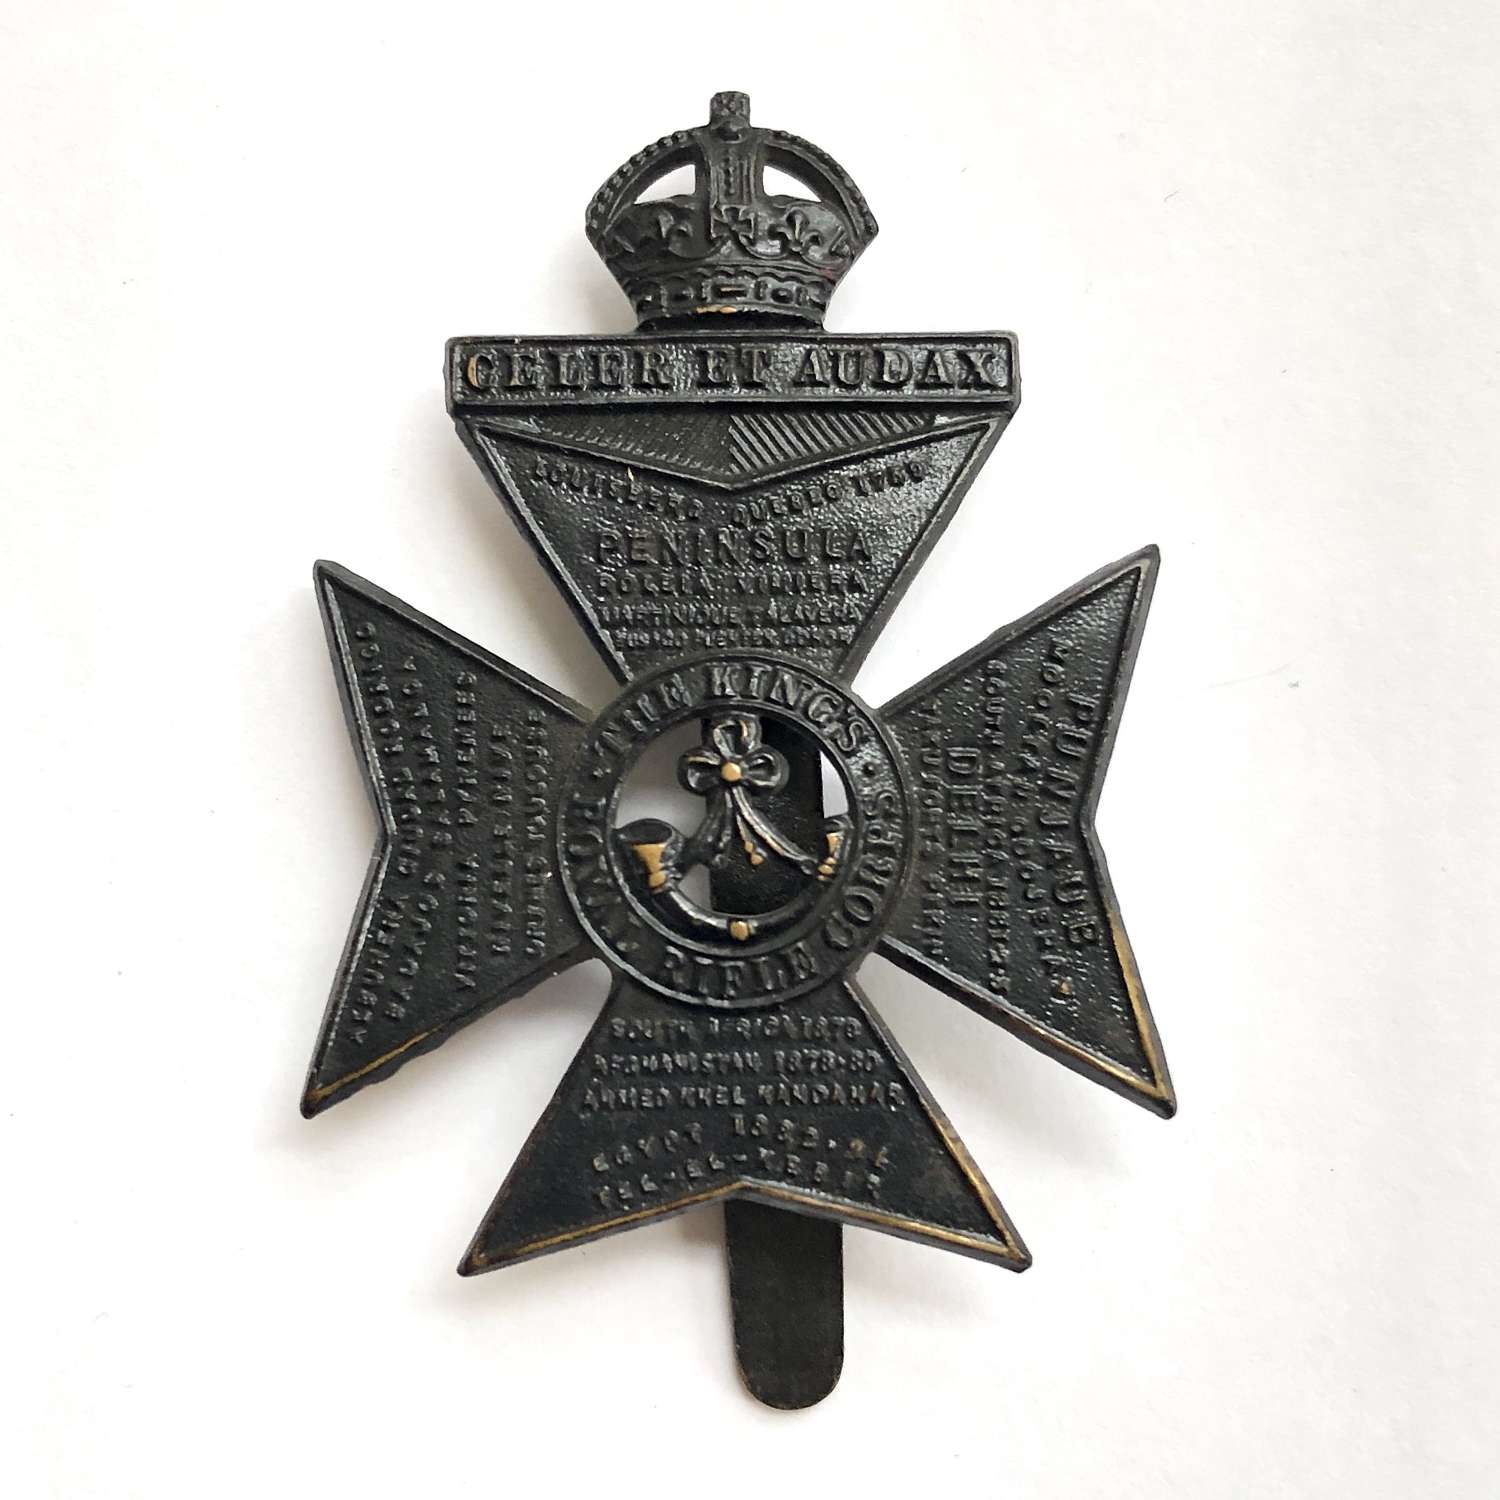 King’s Royal Rifle Corps Edwardian cap badge circa 1901-05